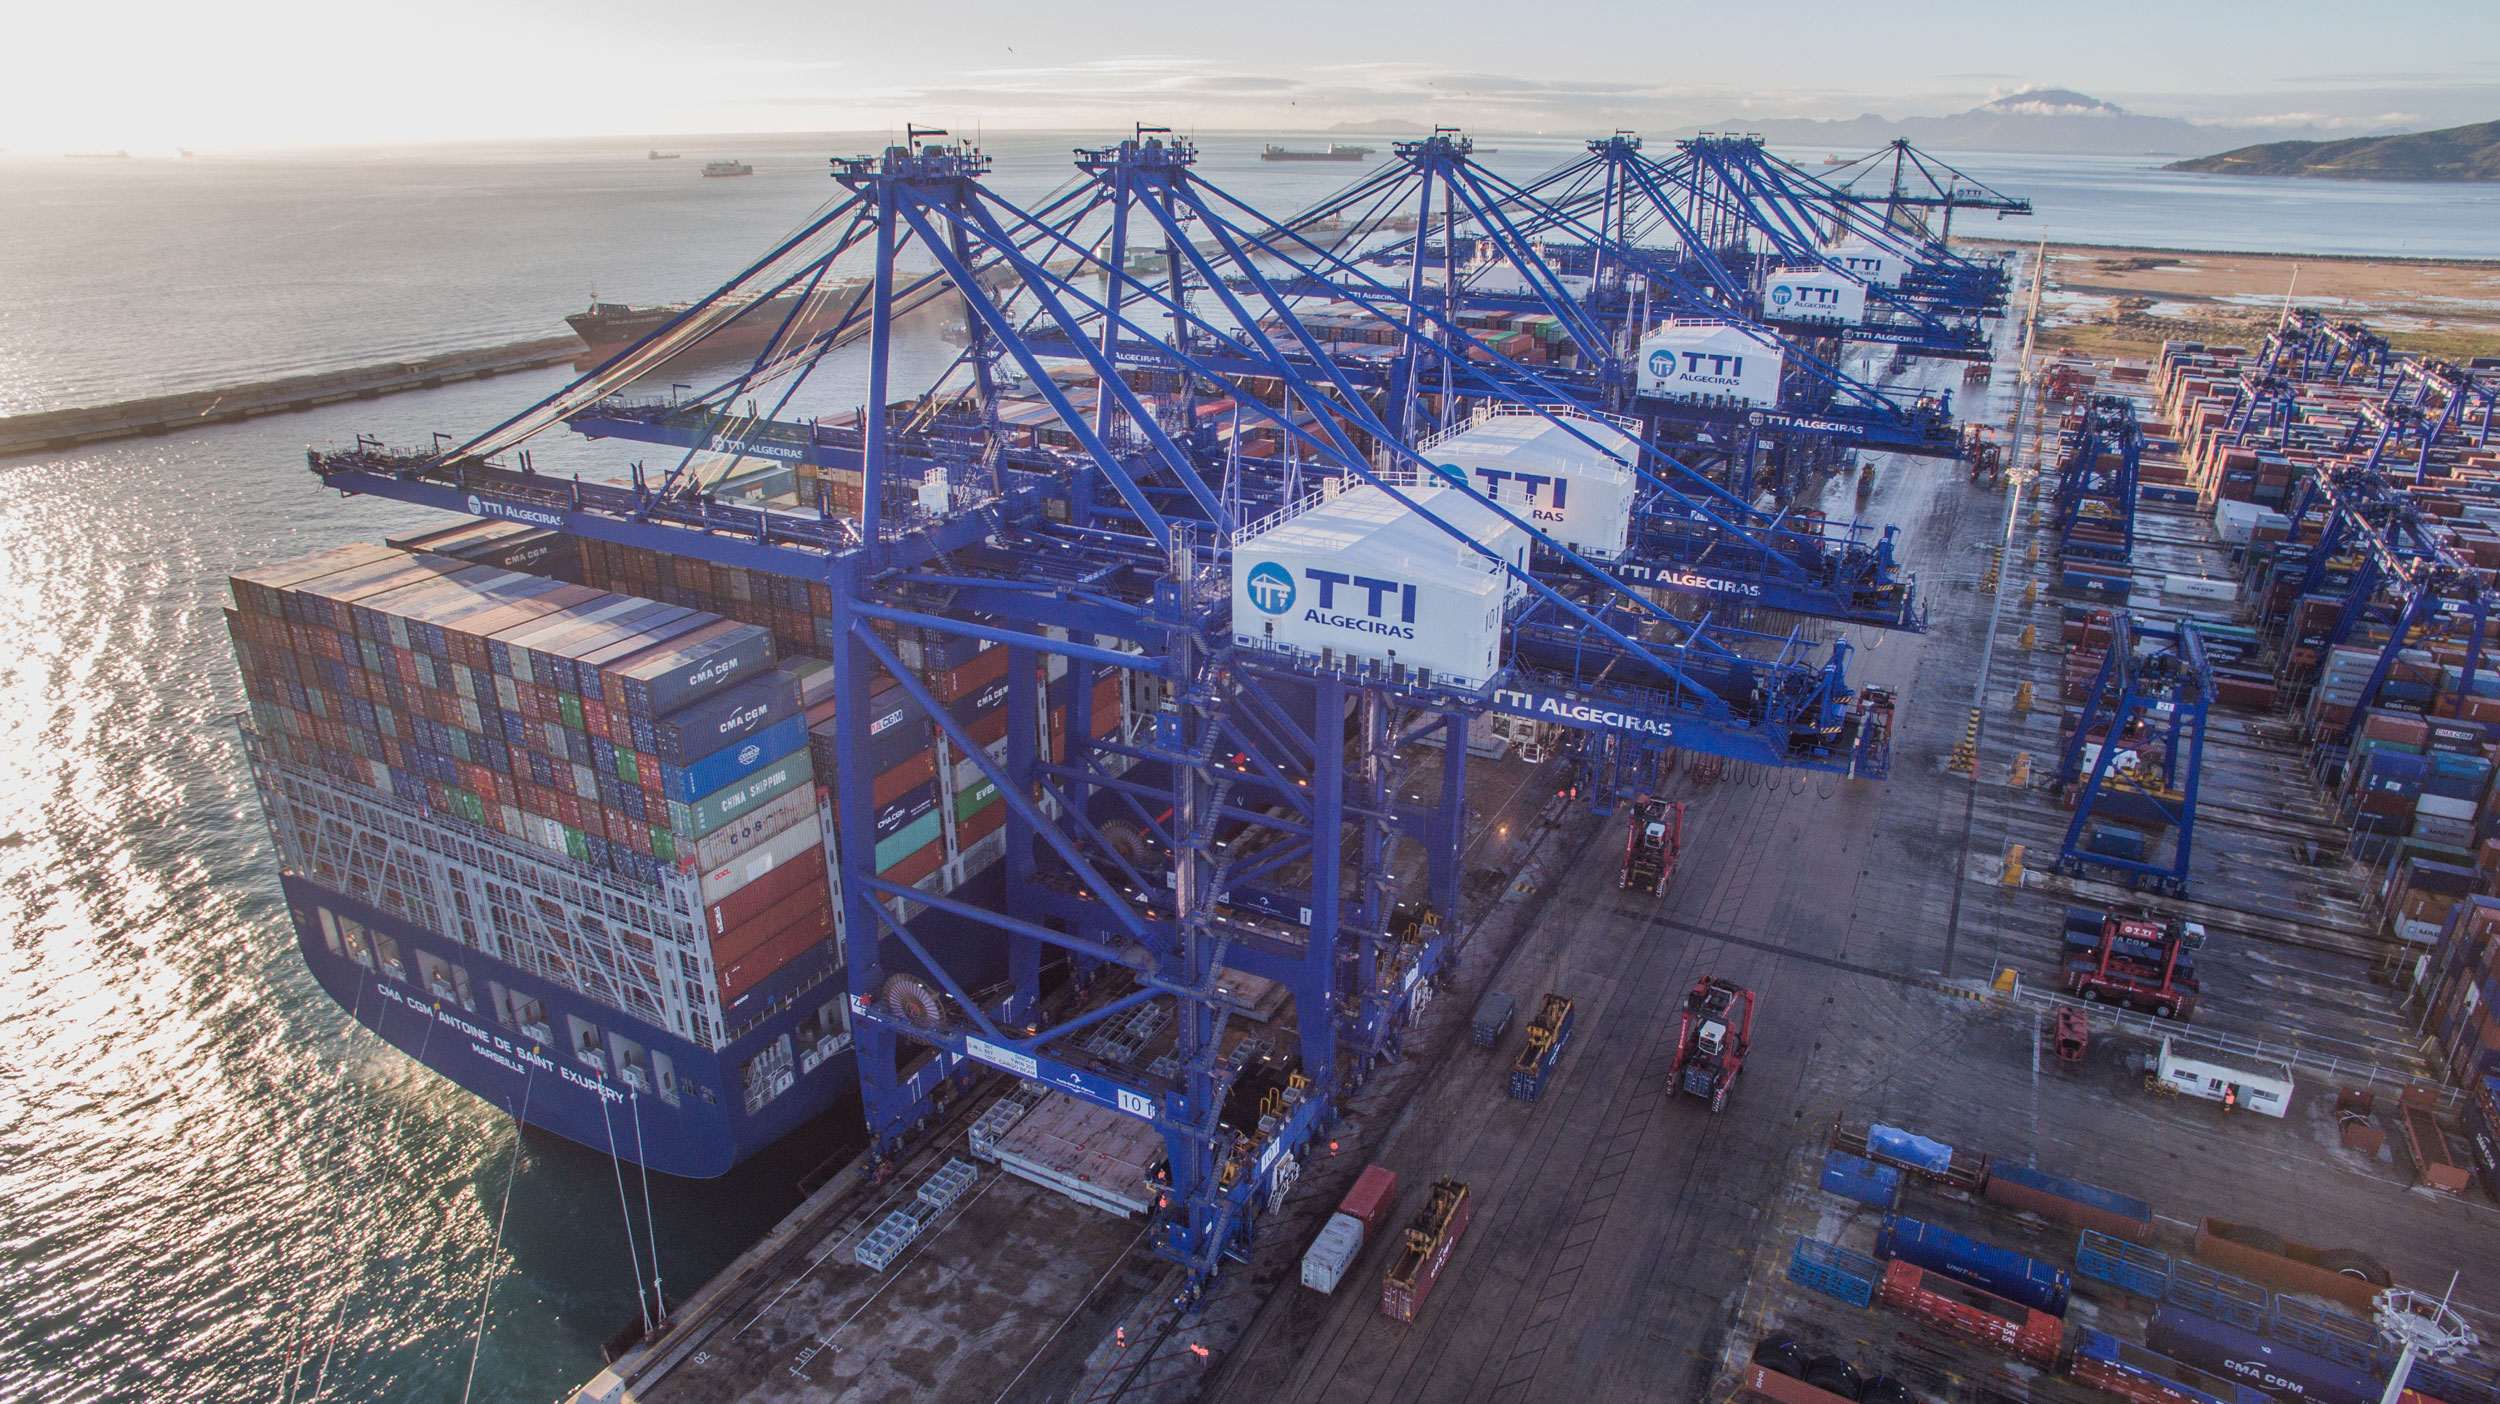 Hyundai Merchant Marine joins forces with CMA CGM on TTI Algeciras operation